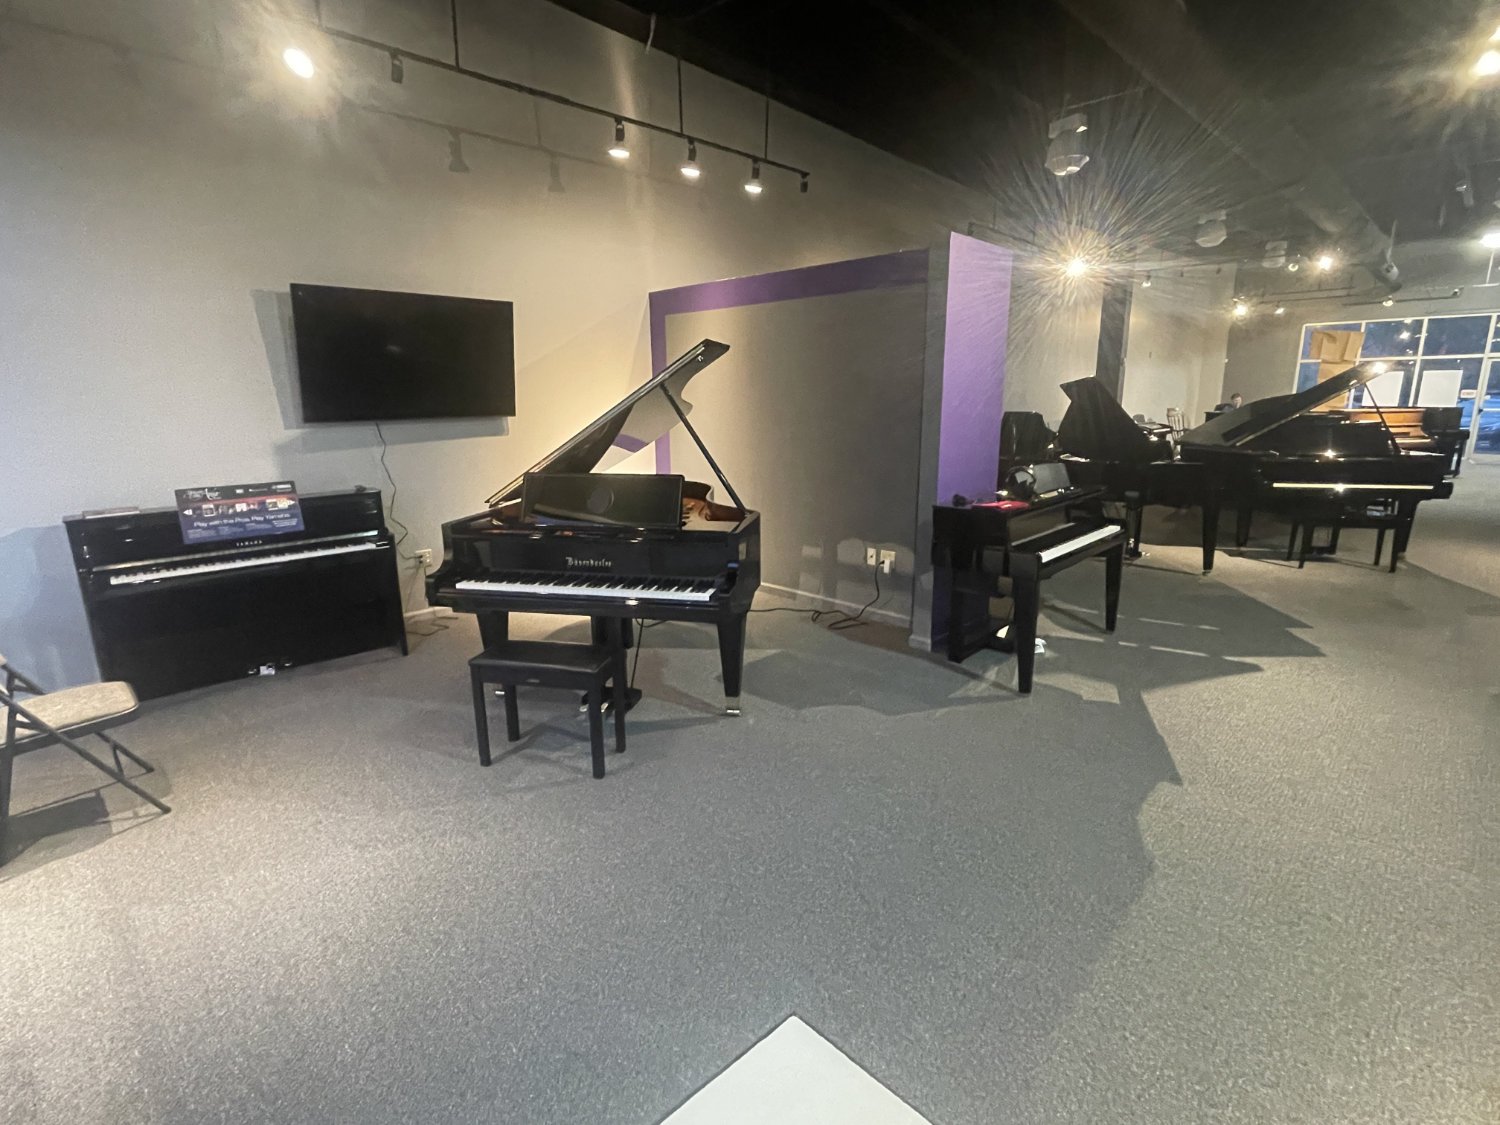 Solich Piano Pittsburgh Cranberry store interior